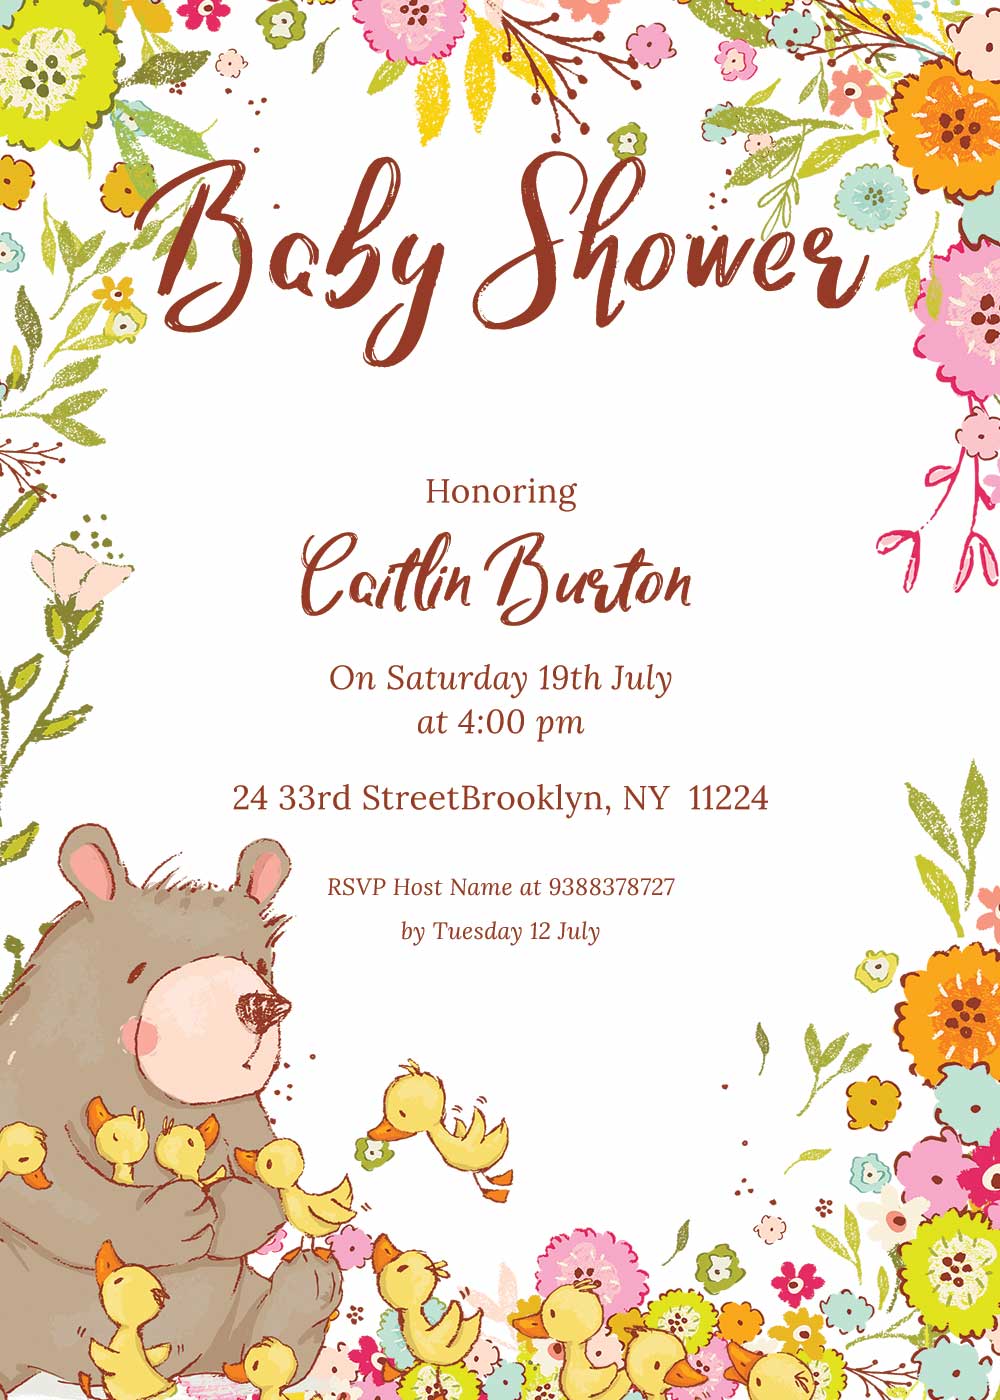 Baby shower invitations - Spring theme